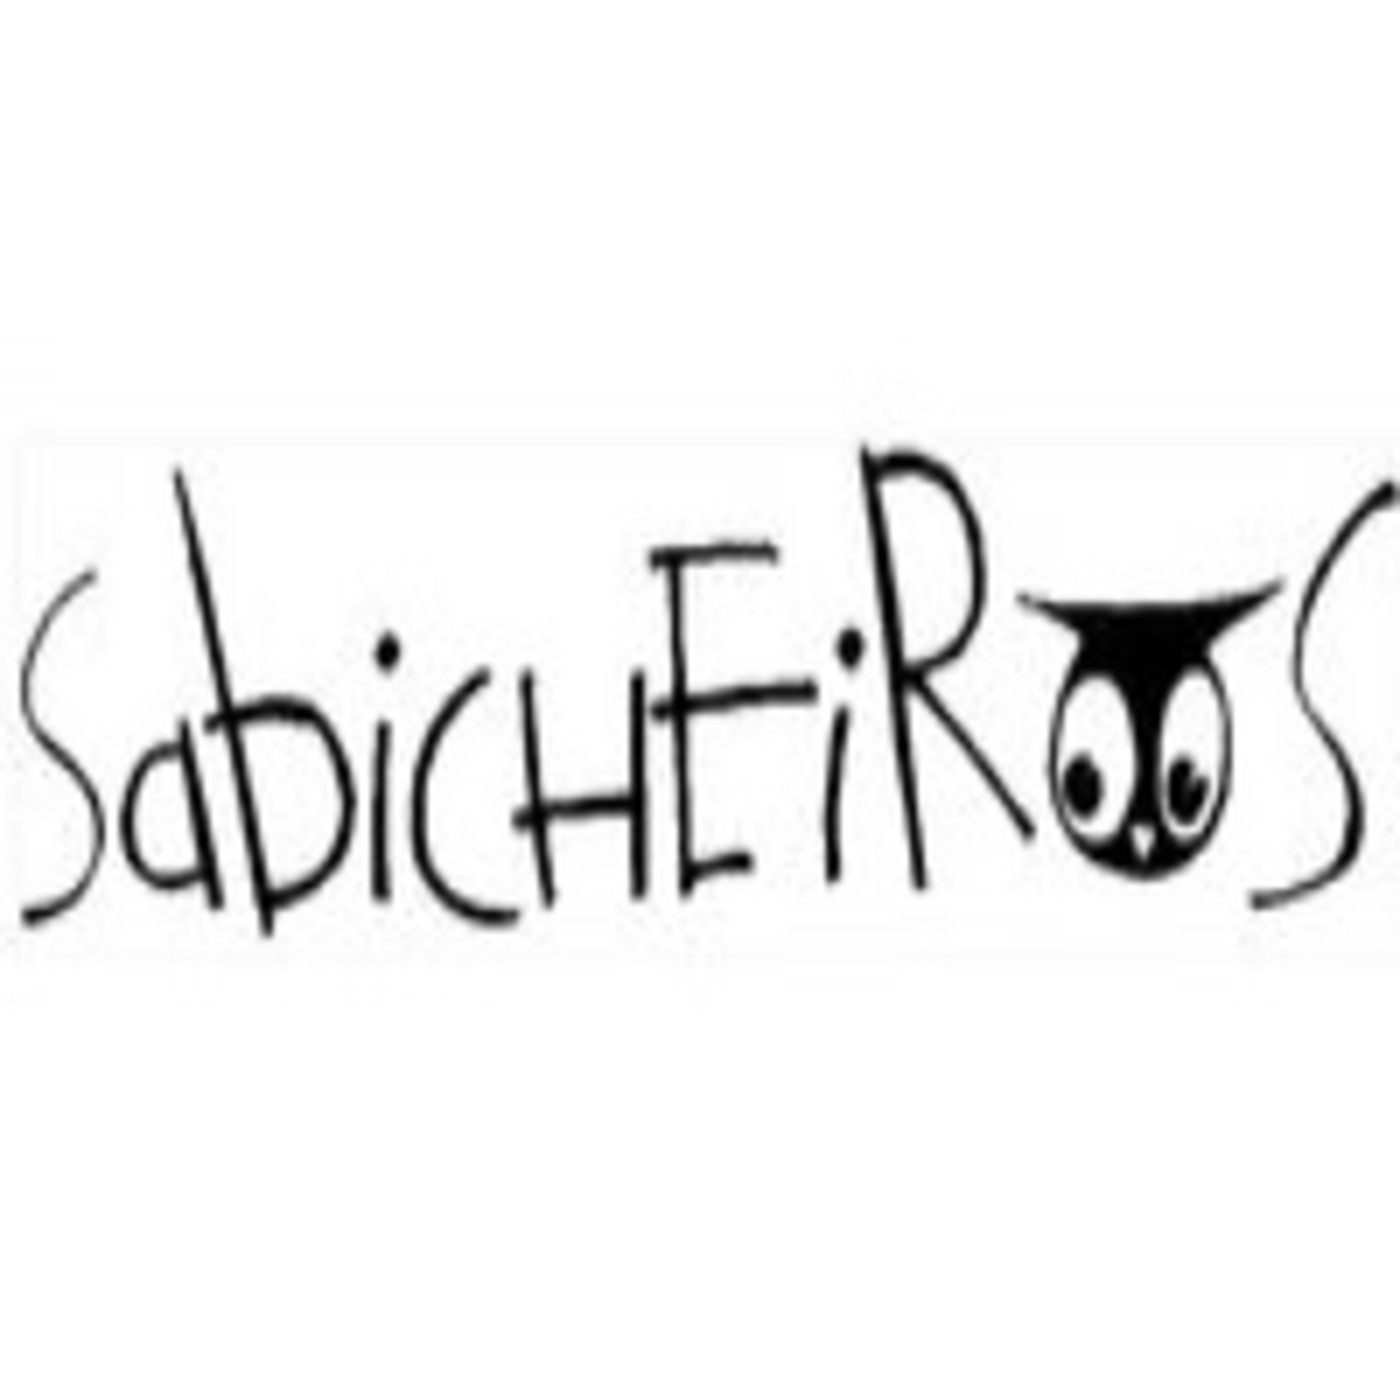 Podcast SABICHEIROS